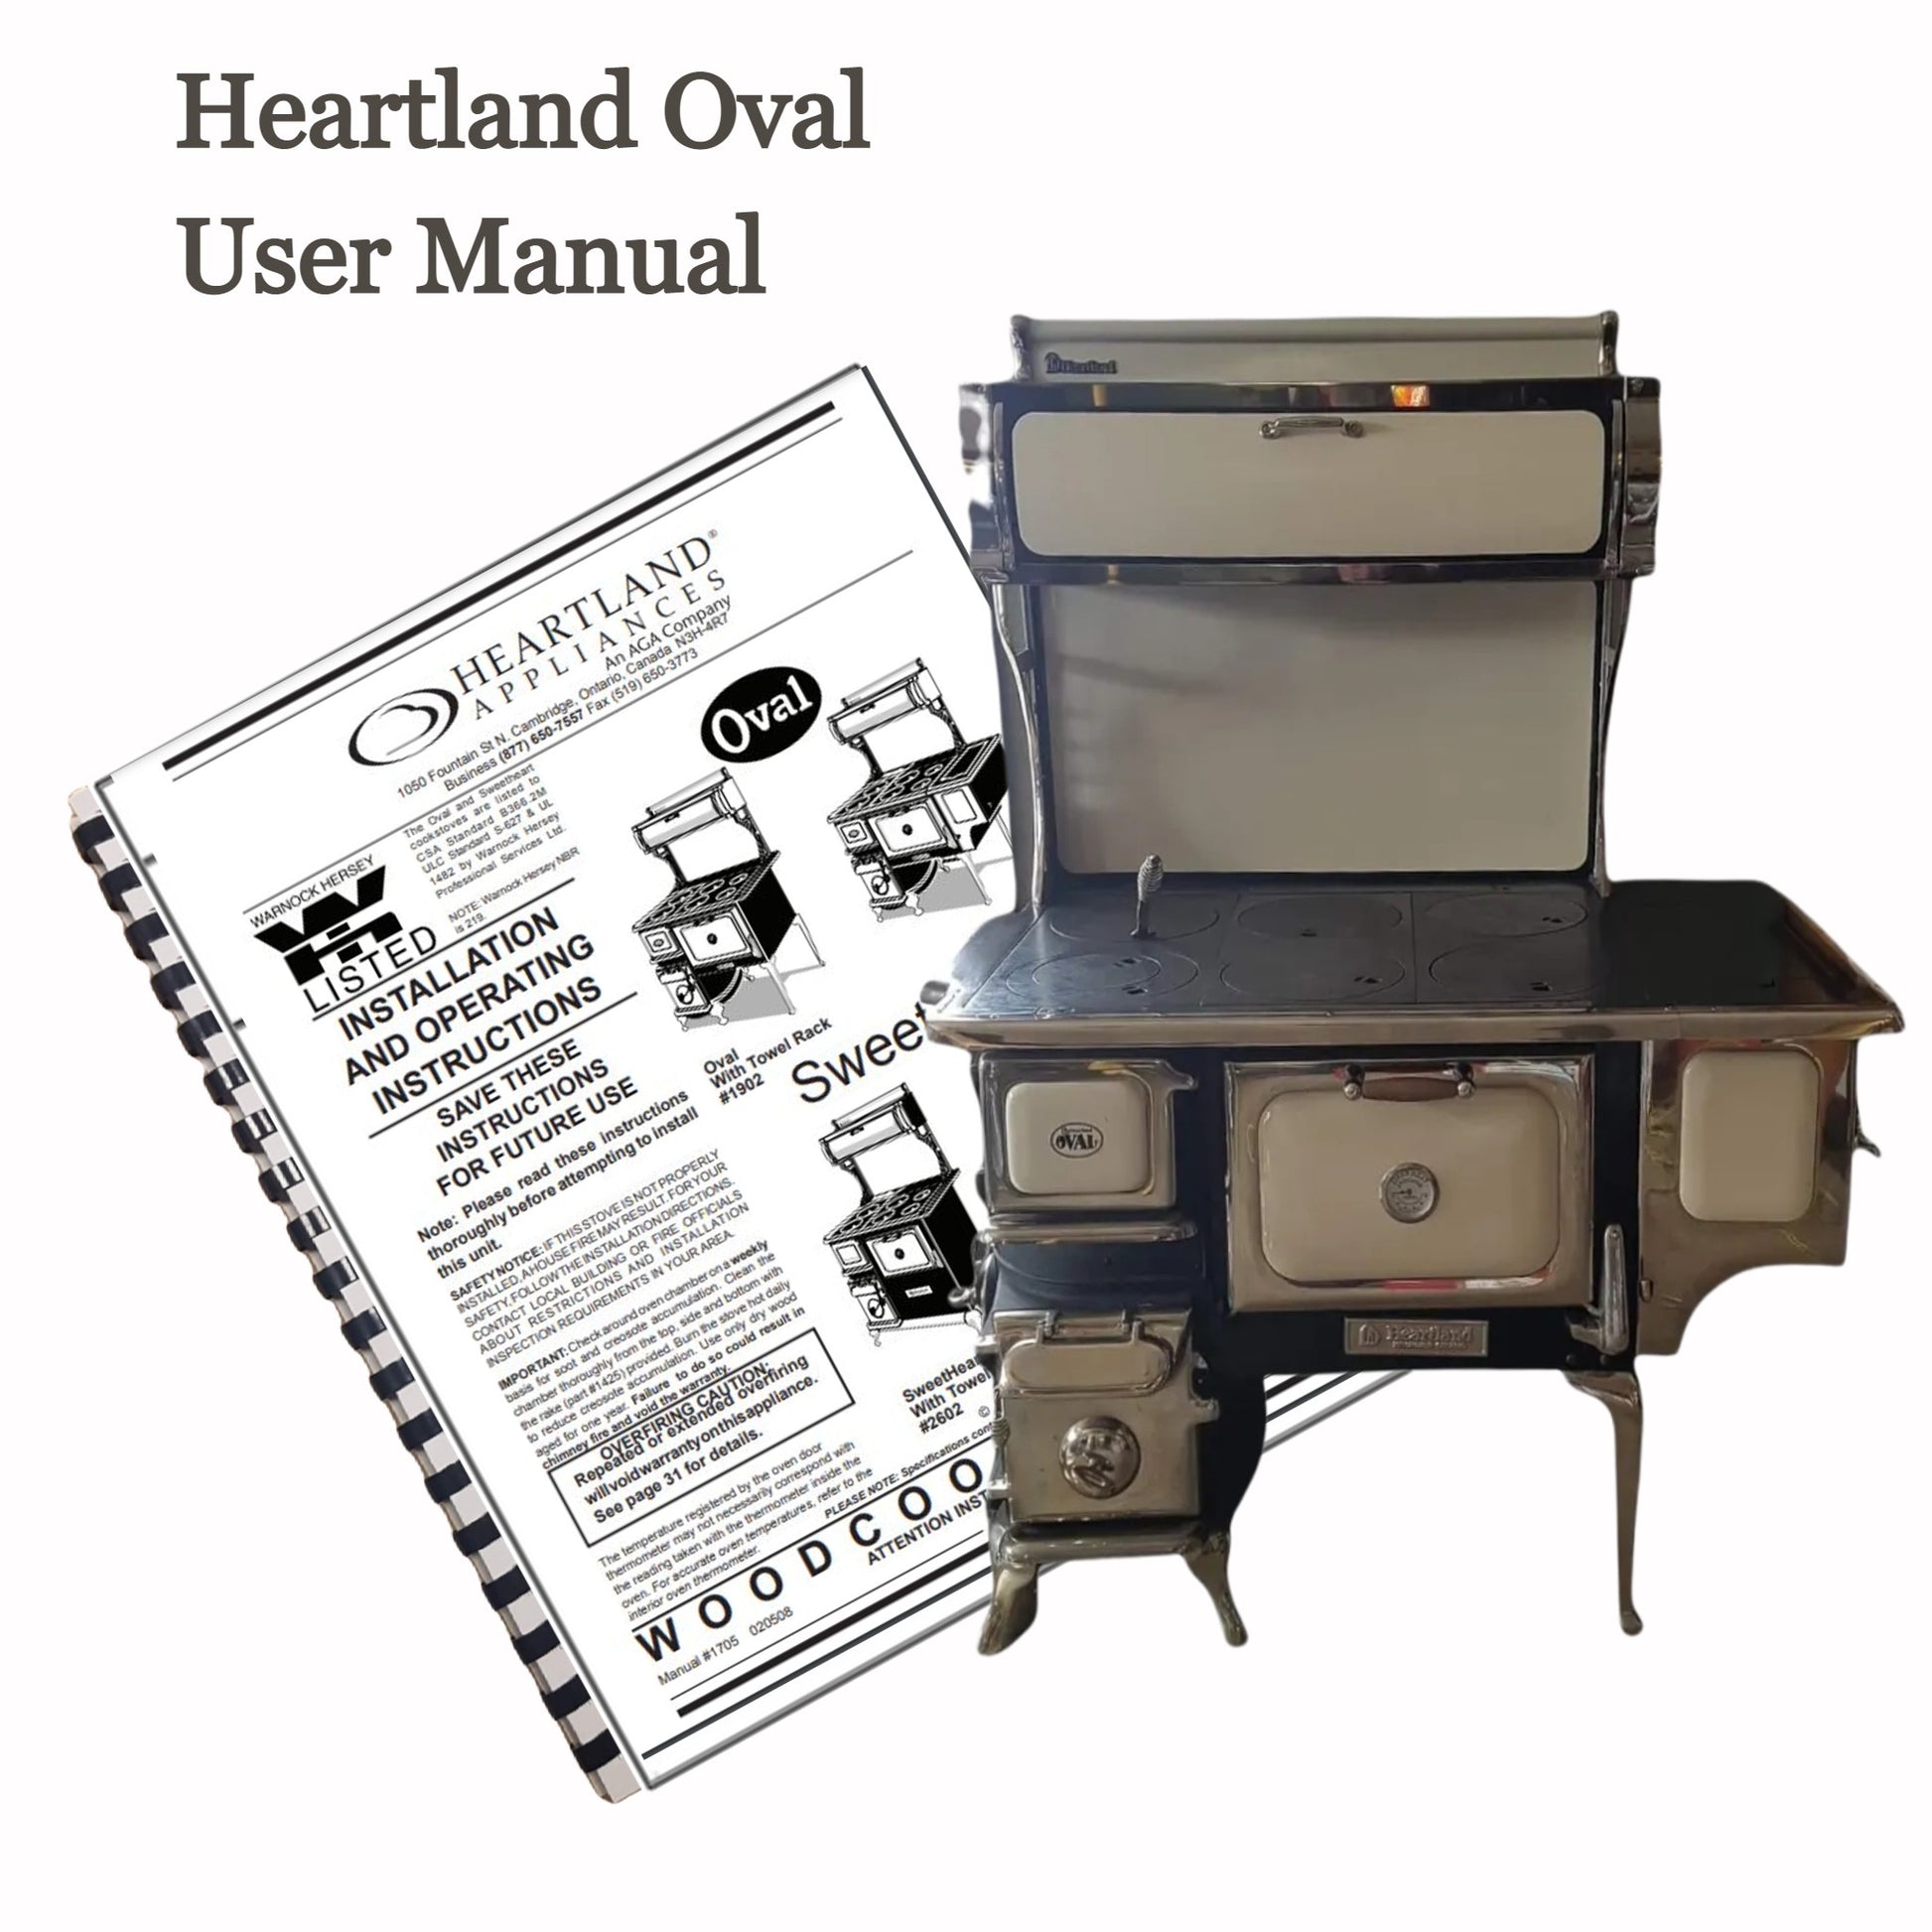 heartland oval / heartland sweetheart wood stove manual